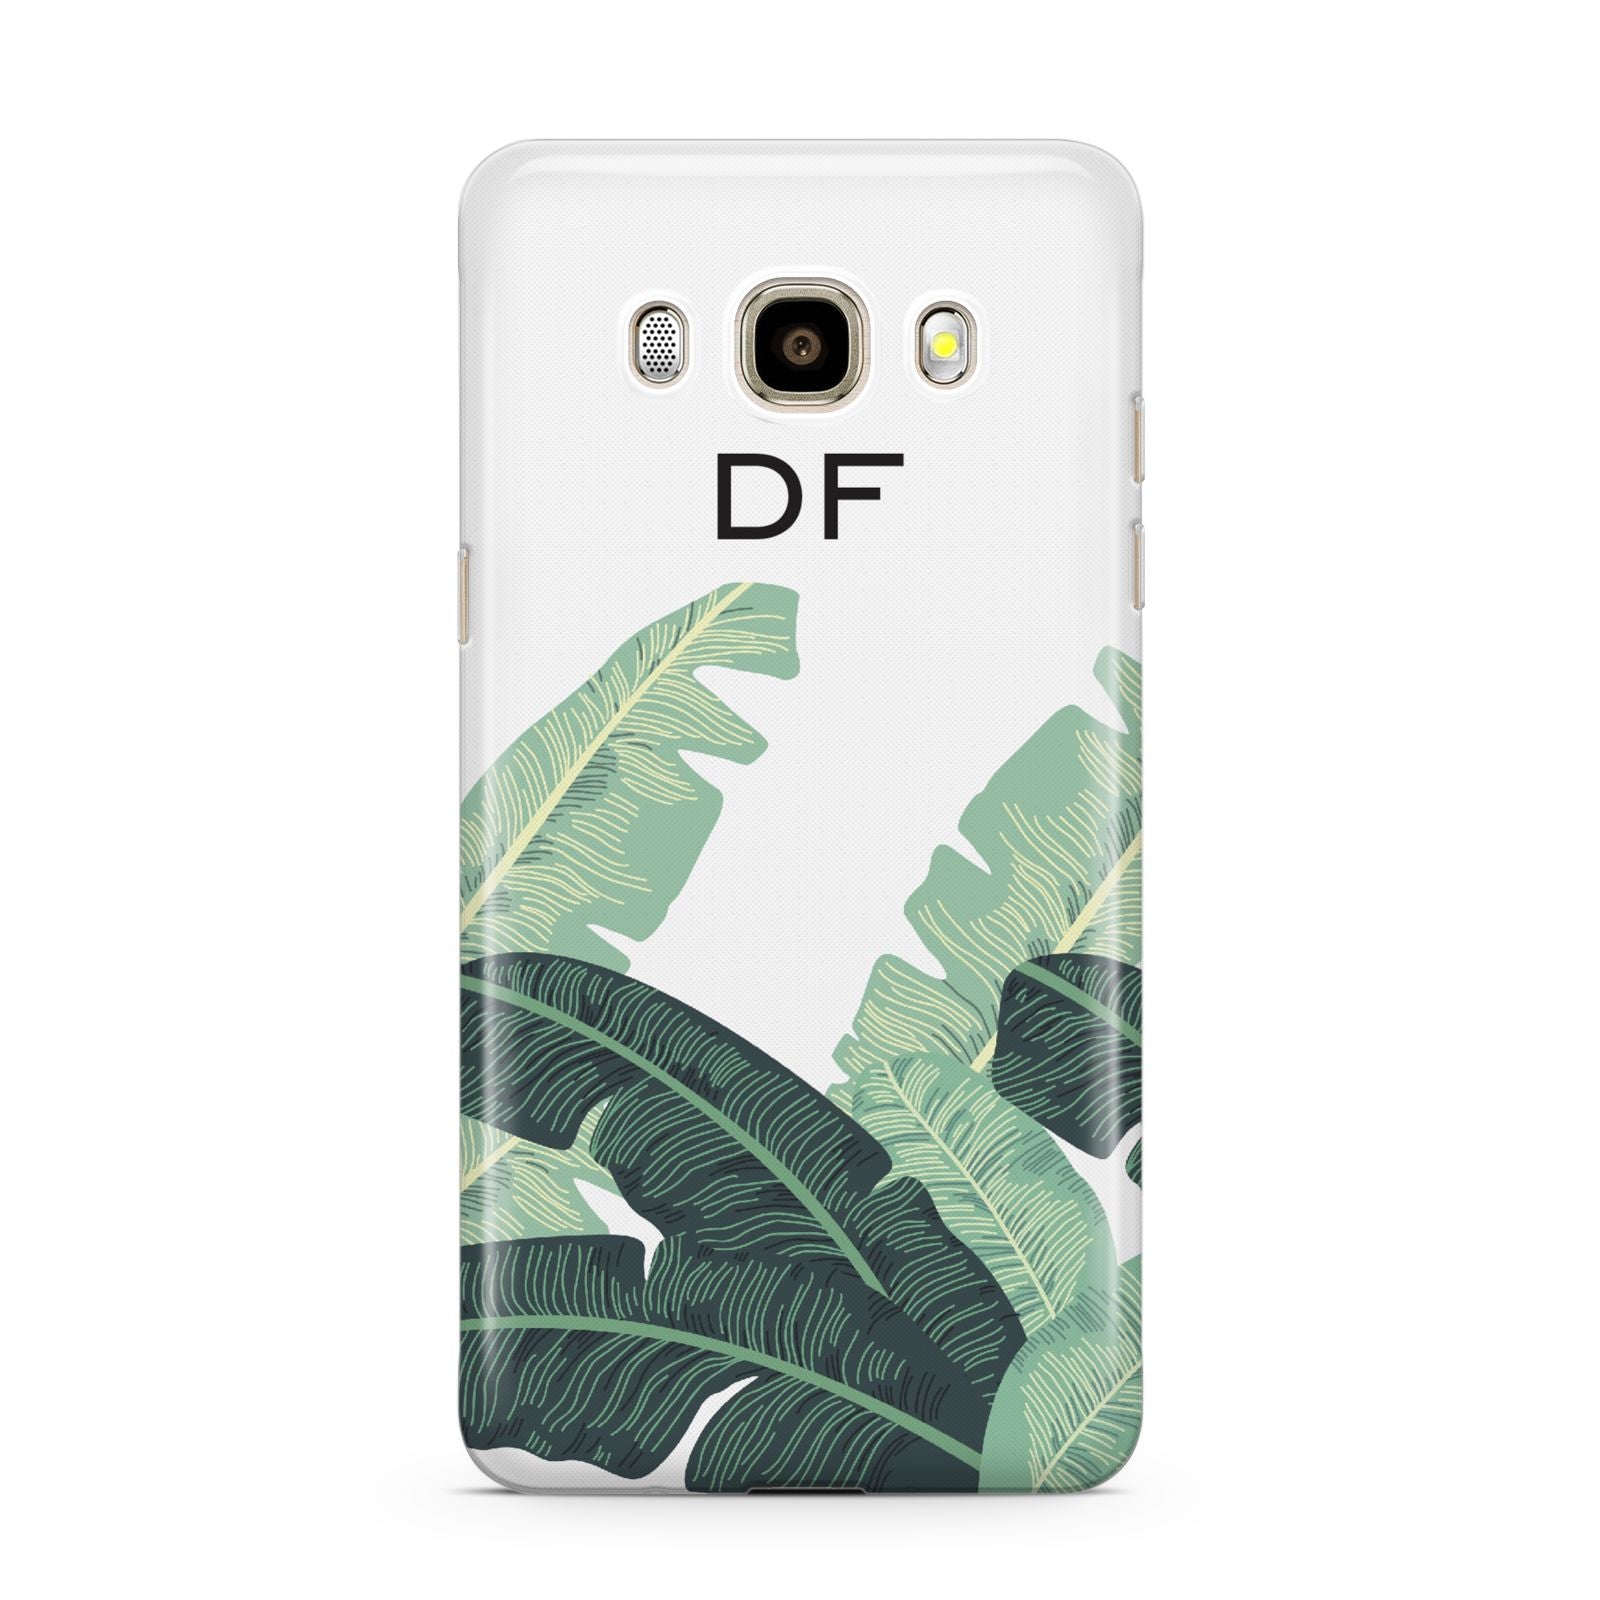 Personalised White Banana Leaf Samsung Galaxy J7 2016 Case on gold phone